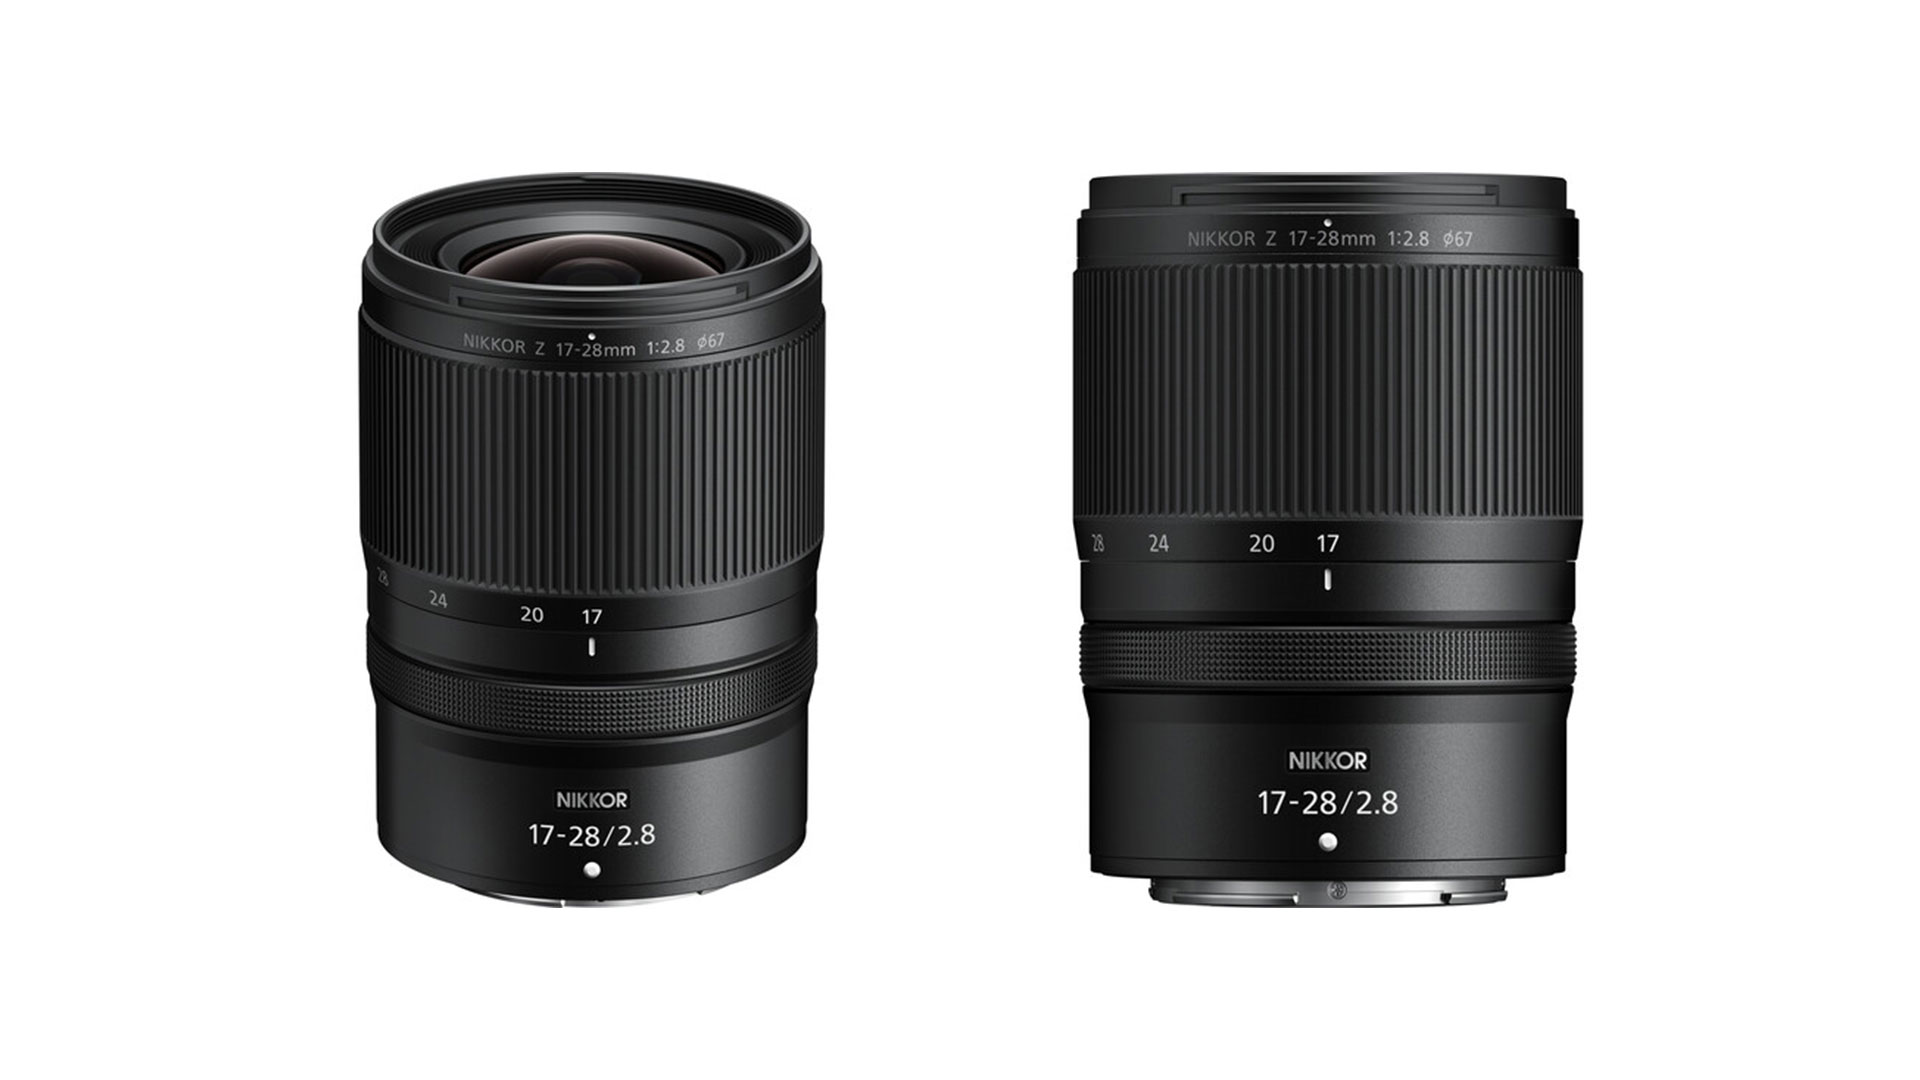 Nikon NIKKOR Z 17-28mm F/2.8 Wide-Angle Zoom Lens Introduced | CineD